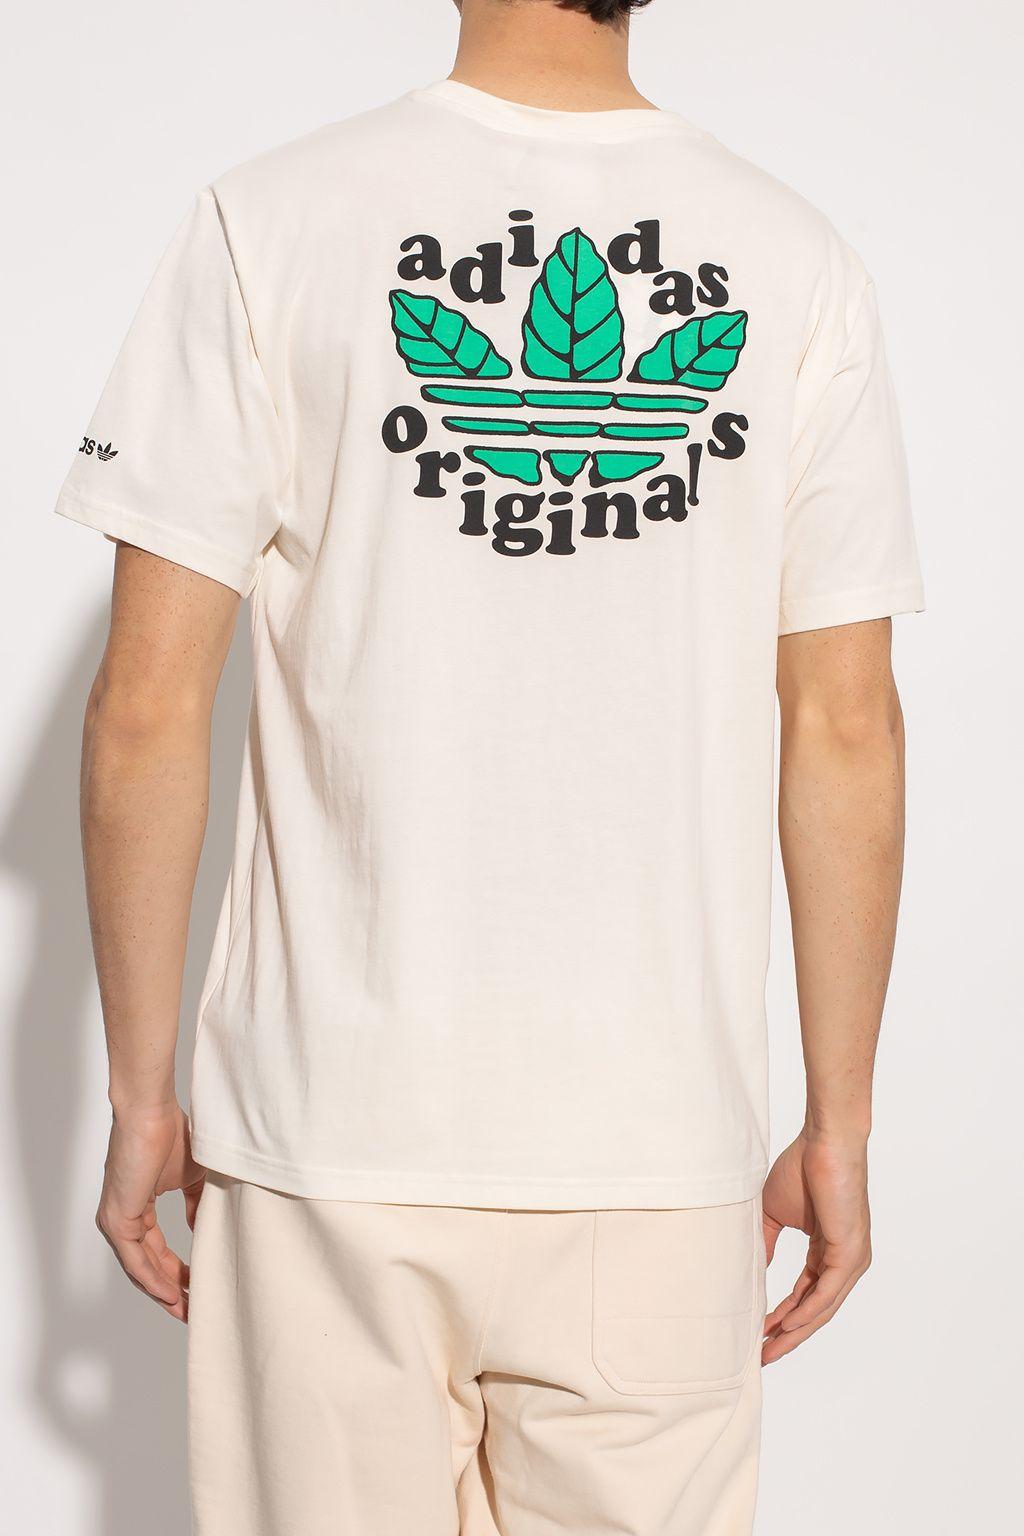 adidas Originals Logo T-shirt in Natural for Men | Lyst